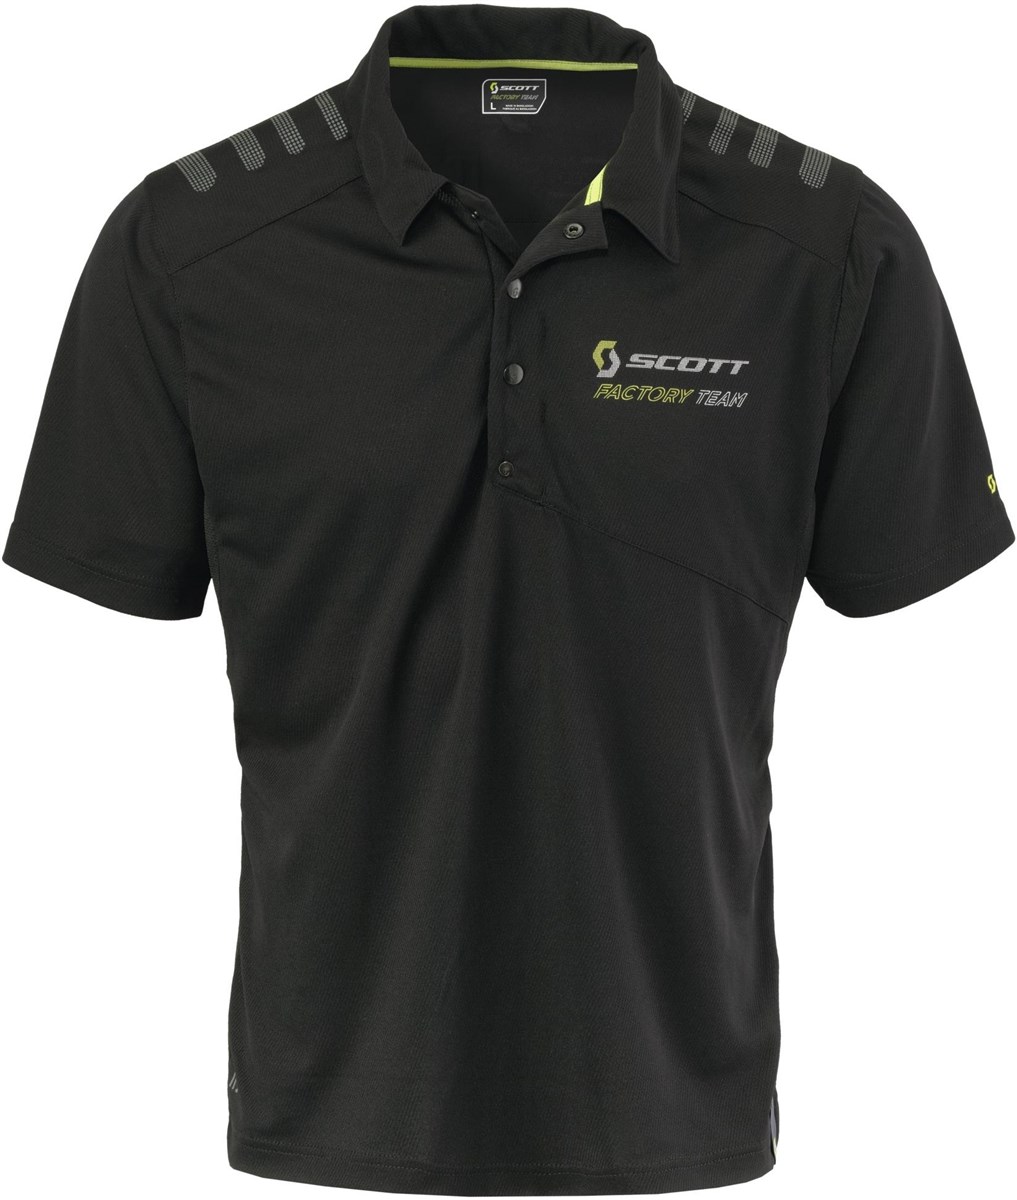 Scott Factory Team Short Sleeve Polo Shirt product image